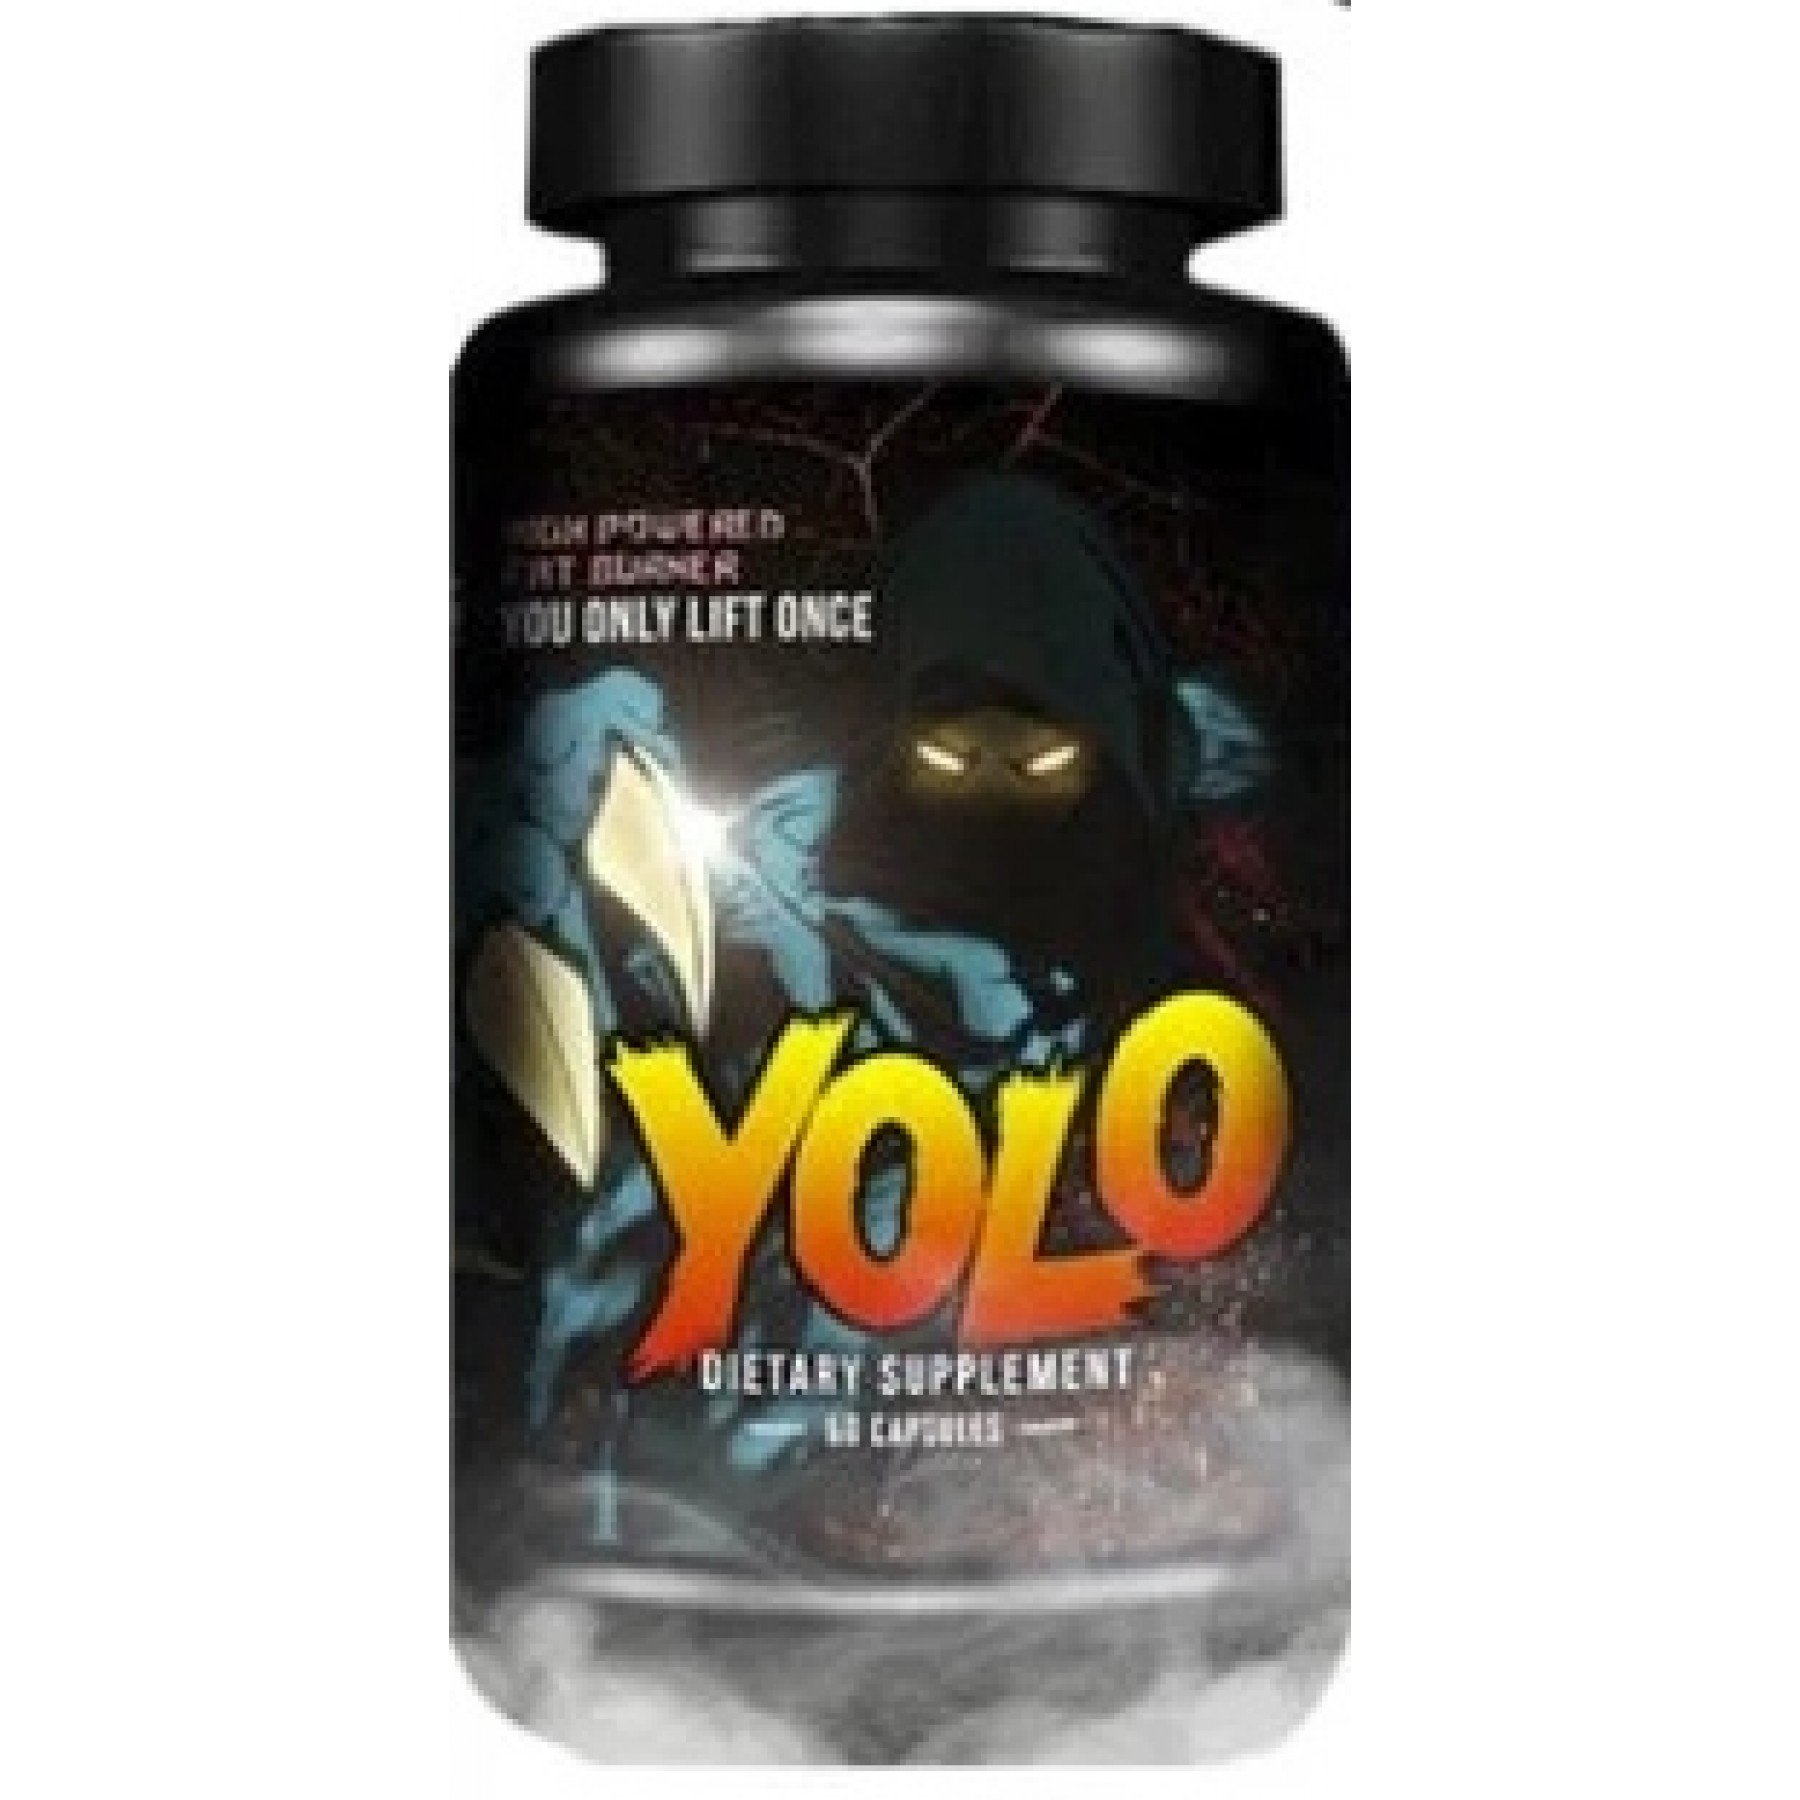 YOLO, 60 шт, Boss Sport Nutrition. Термогеники (Термодженики). Снижение веса Сжигание жира 